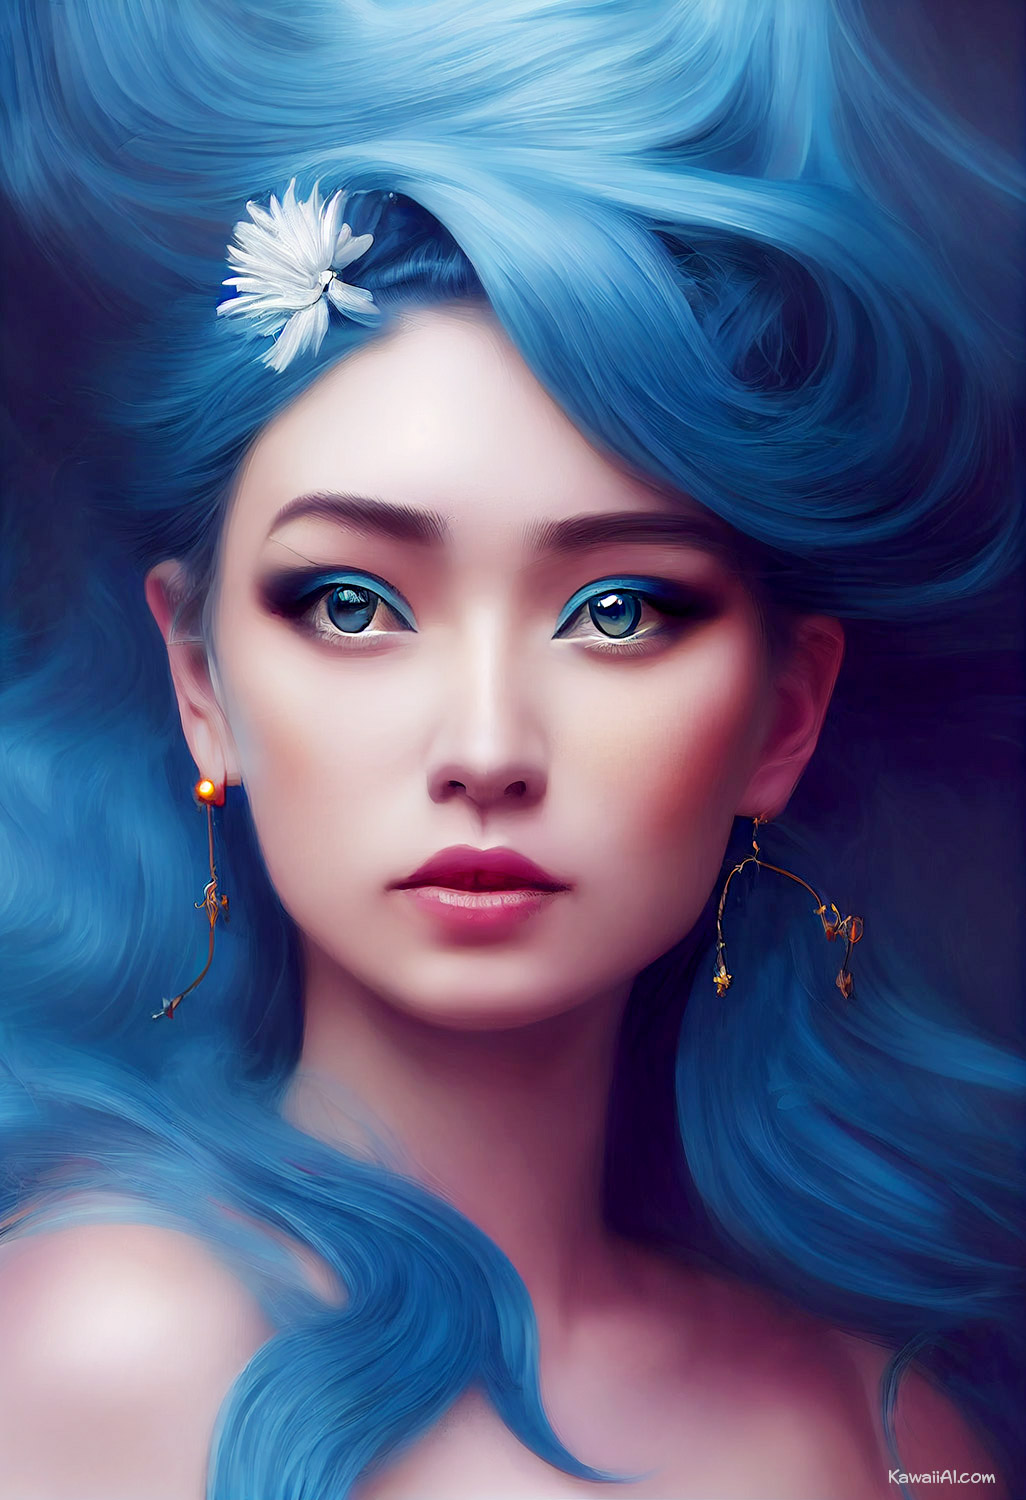 Cute Kaiju かわいい怪獣 Using Midjourney Ai Art Kawaii Dreamy Portraits Of Women With Blue Hair Vrogue